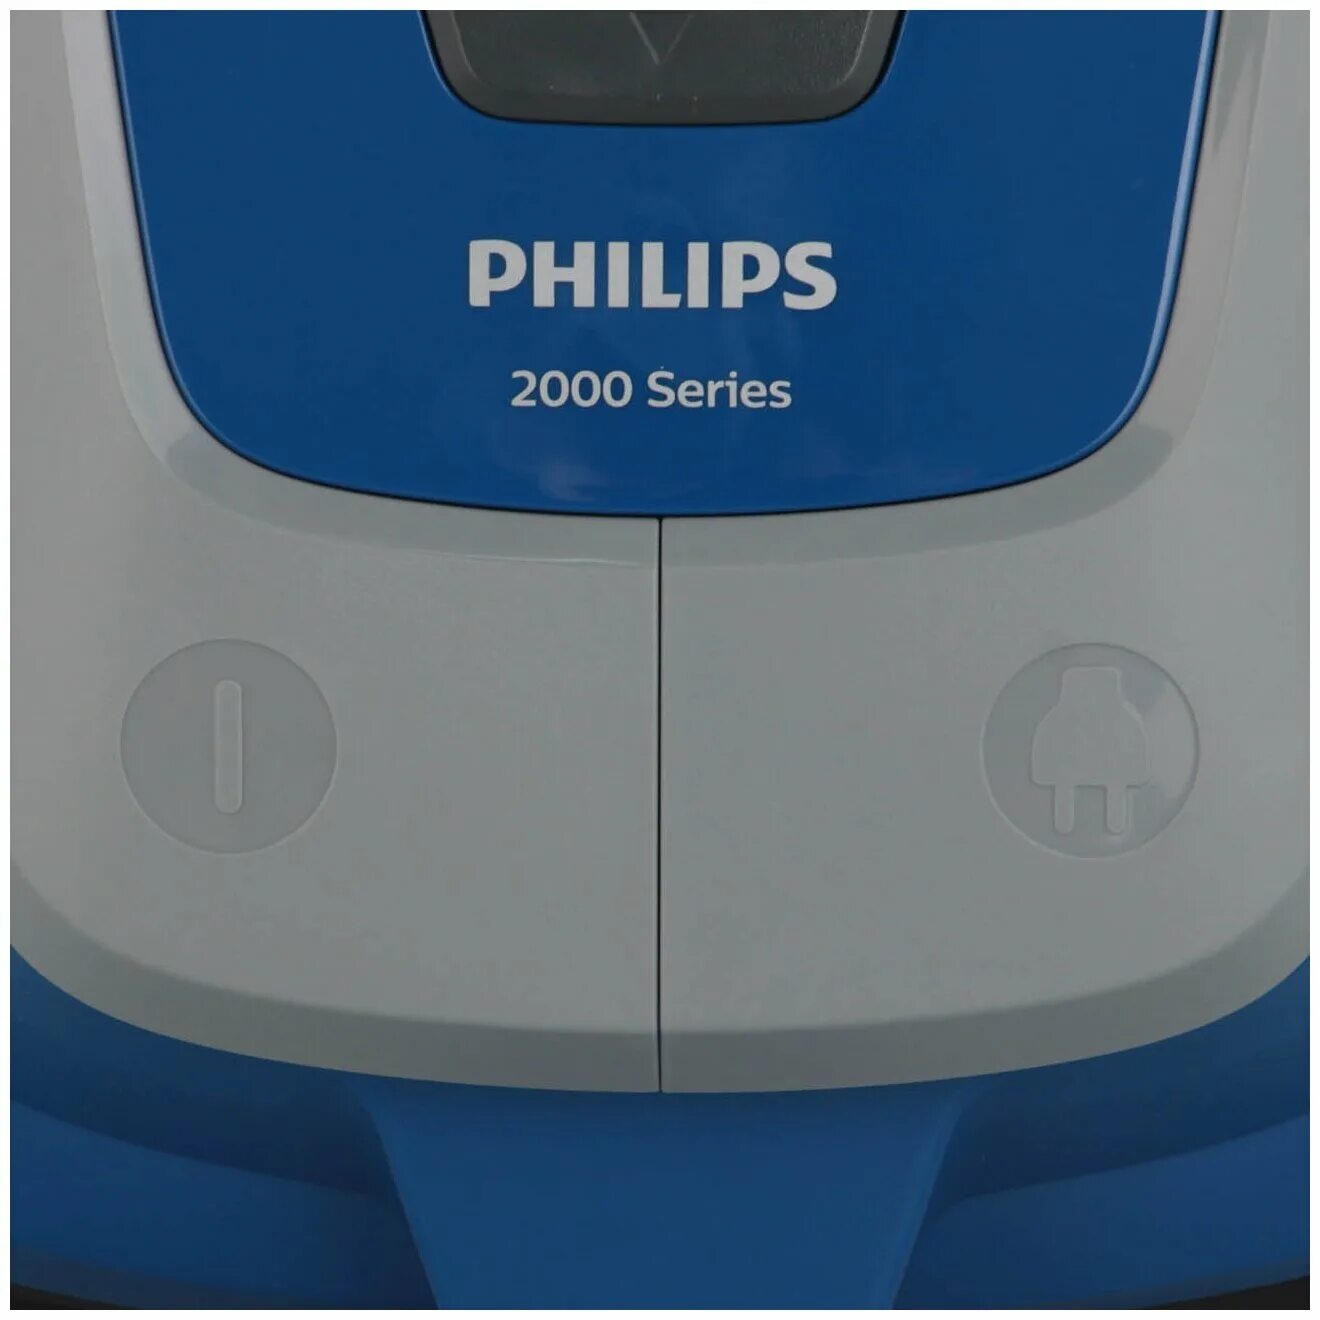 Пылесос Philips xb2062/01. Philips xb2022/xb2023. Пылесос Philips xb2022. Пылесос с контейнером для пыли Philips xb2062/01. Пылесос филипс 2000 series